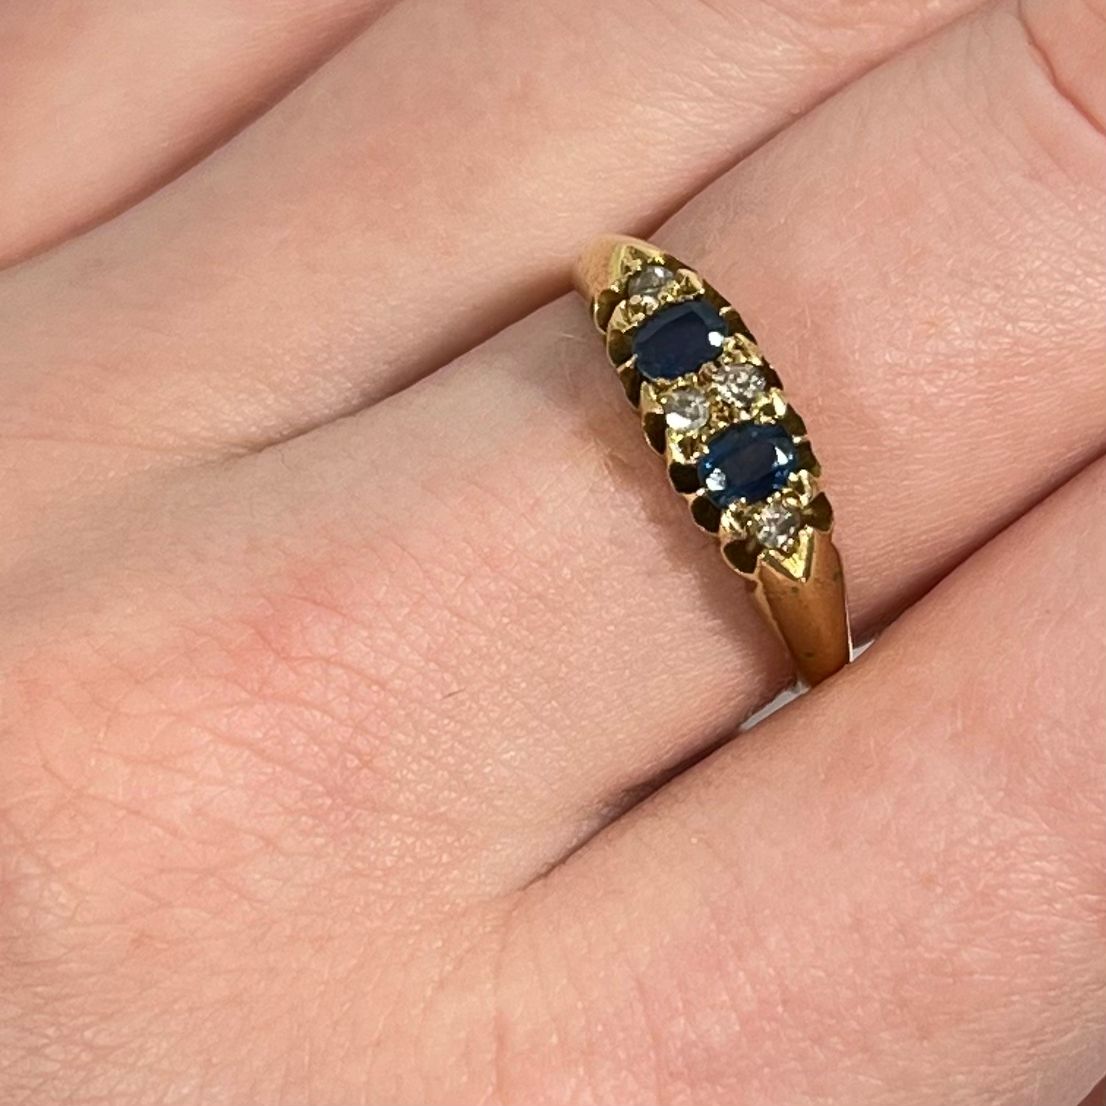 18ct Sapphire & Diamond ring - Birmingham 4g - size P 1/2. - Image 2 of 4